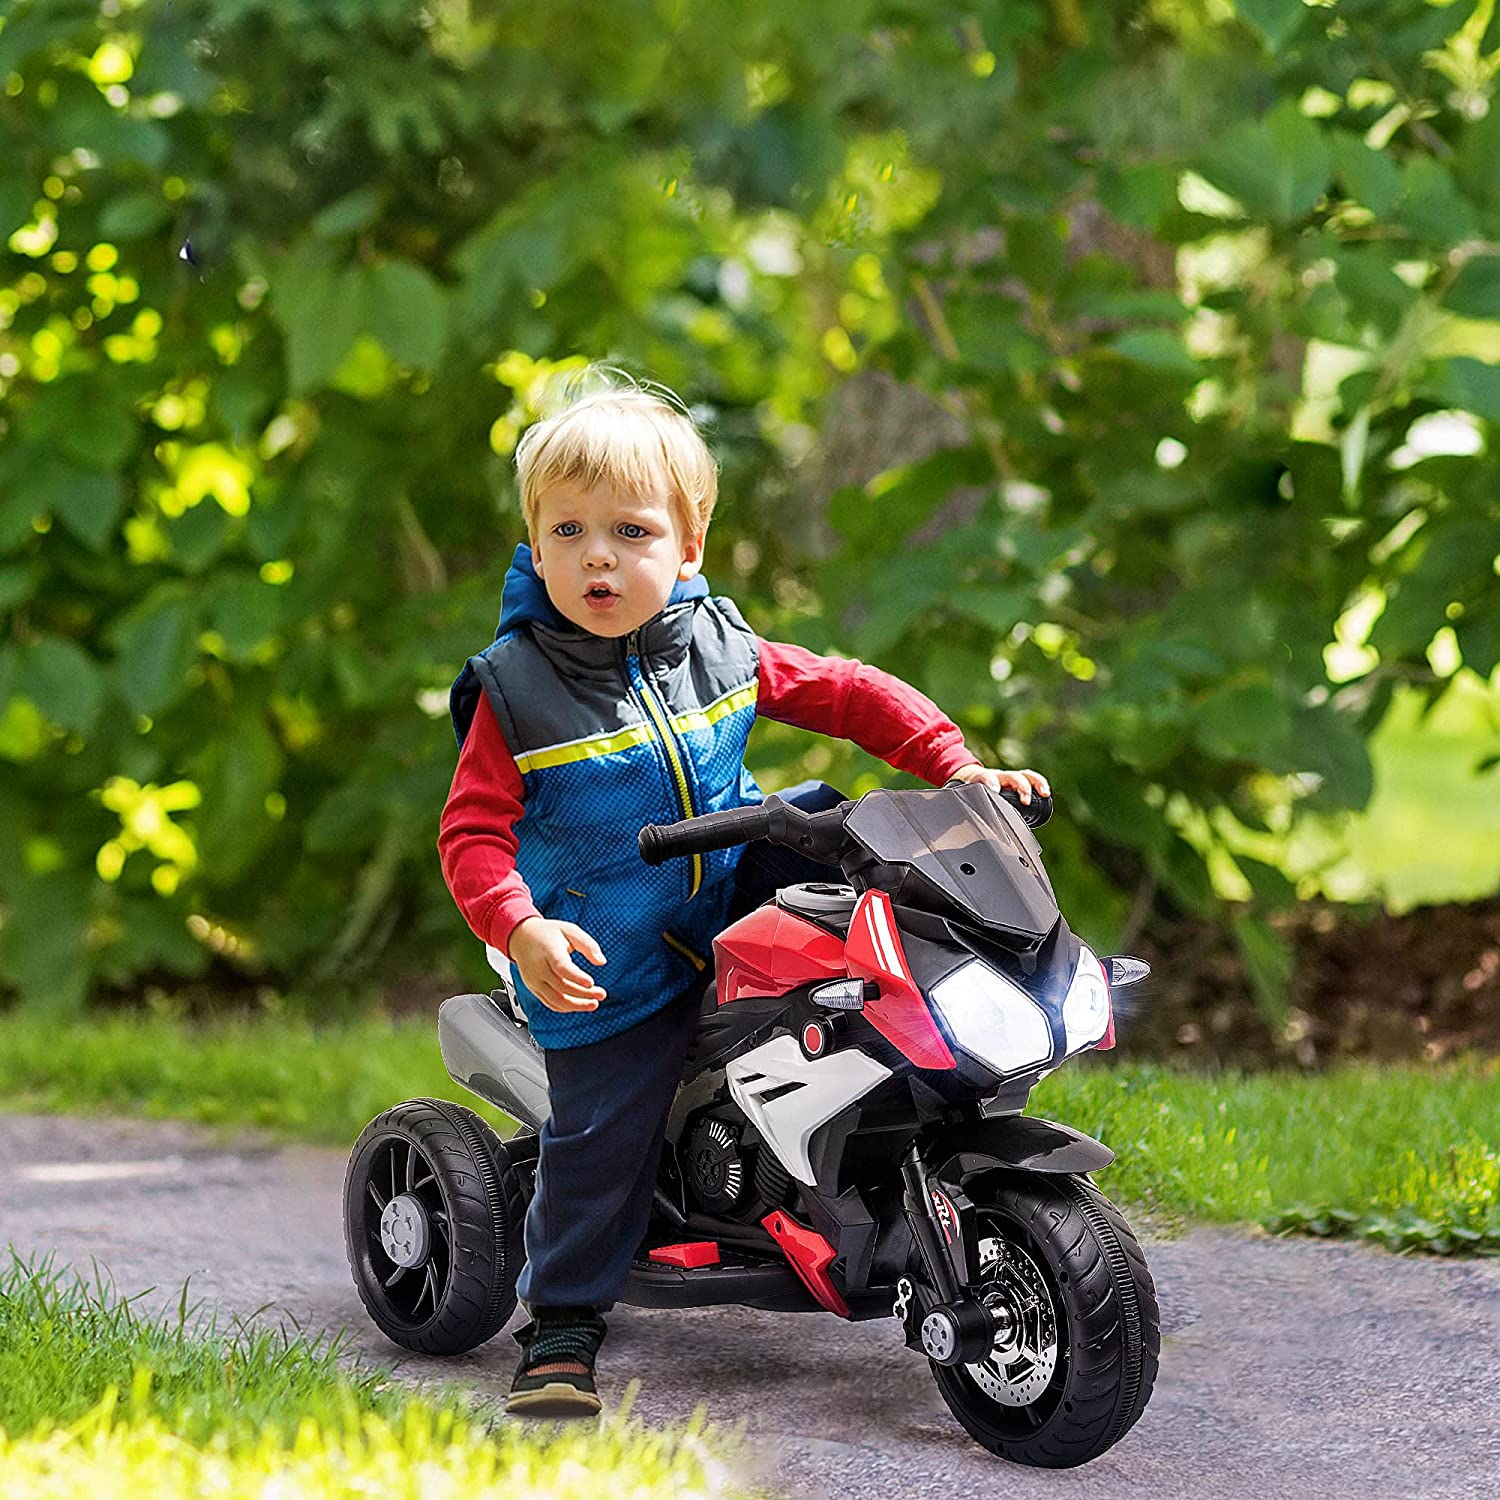 EVERCROSS EV12M Motocicleta Eléctrica Niños, Moto Eléctrica con Motor de  300 W, Modos de Velocidad de